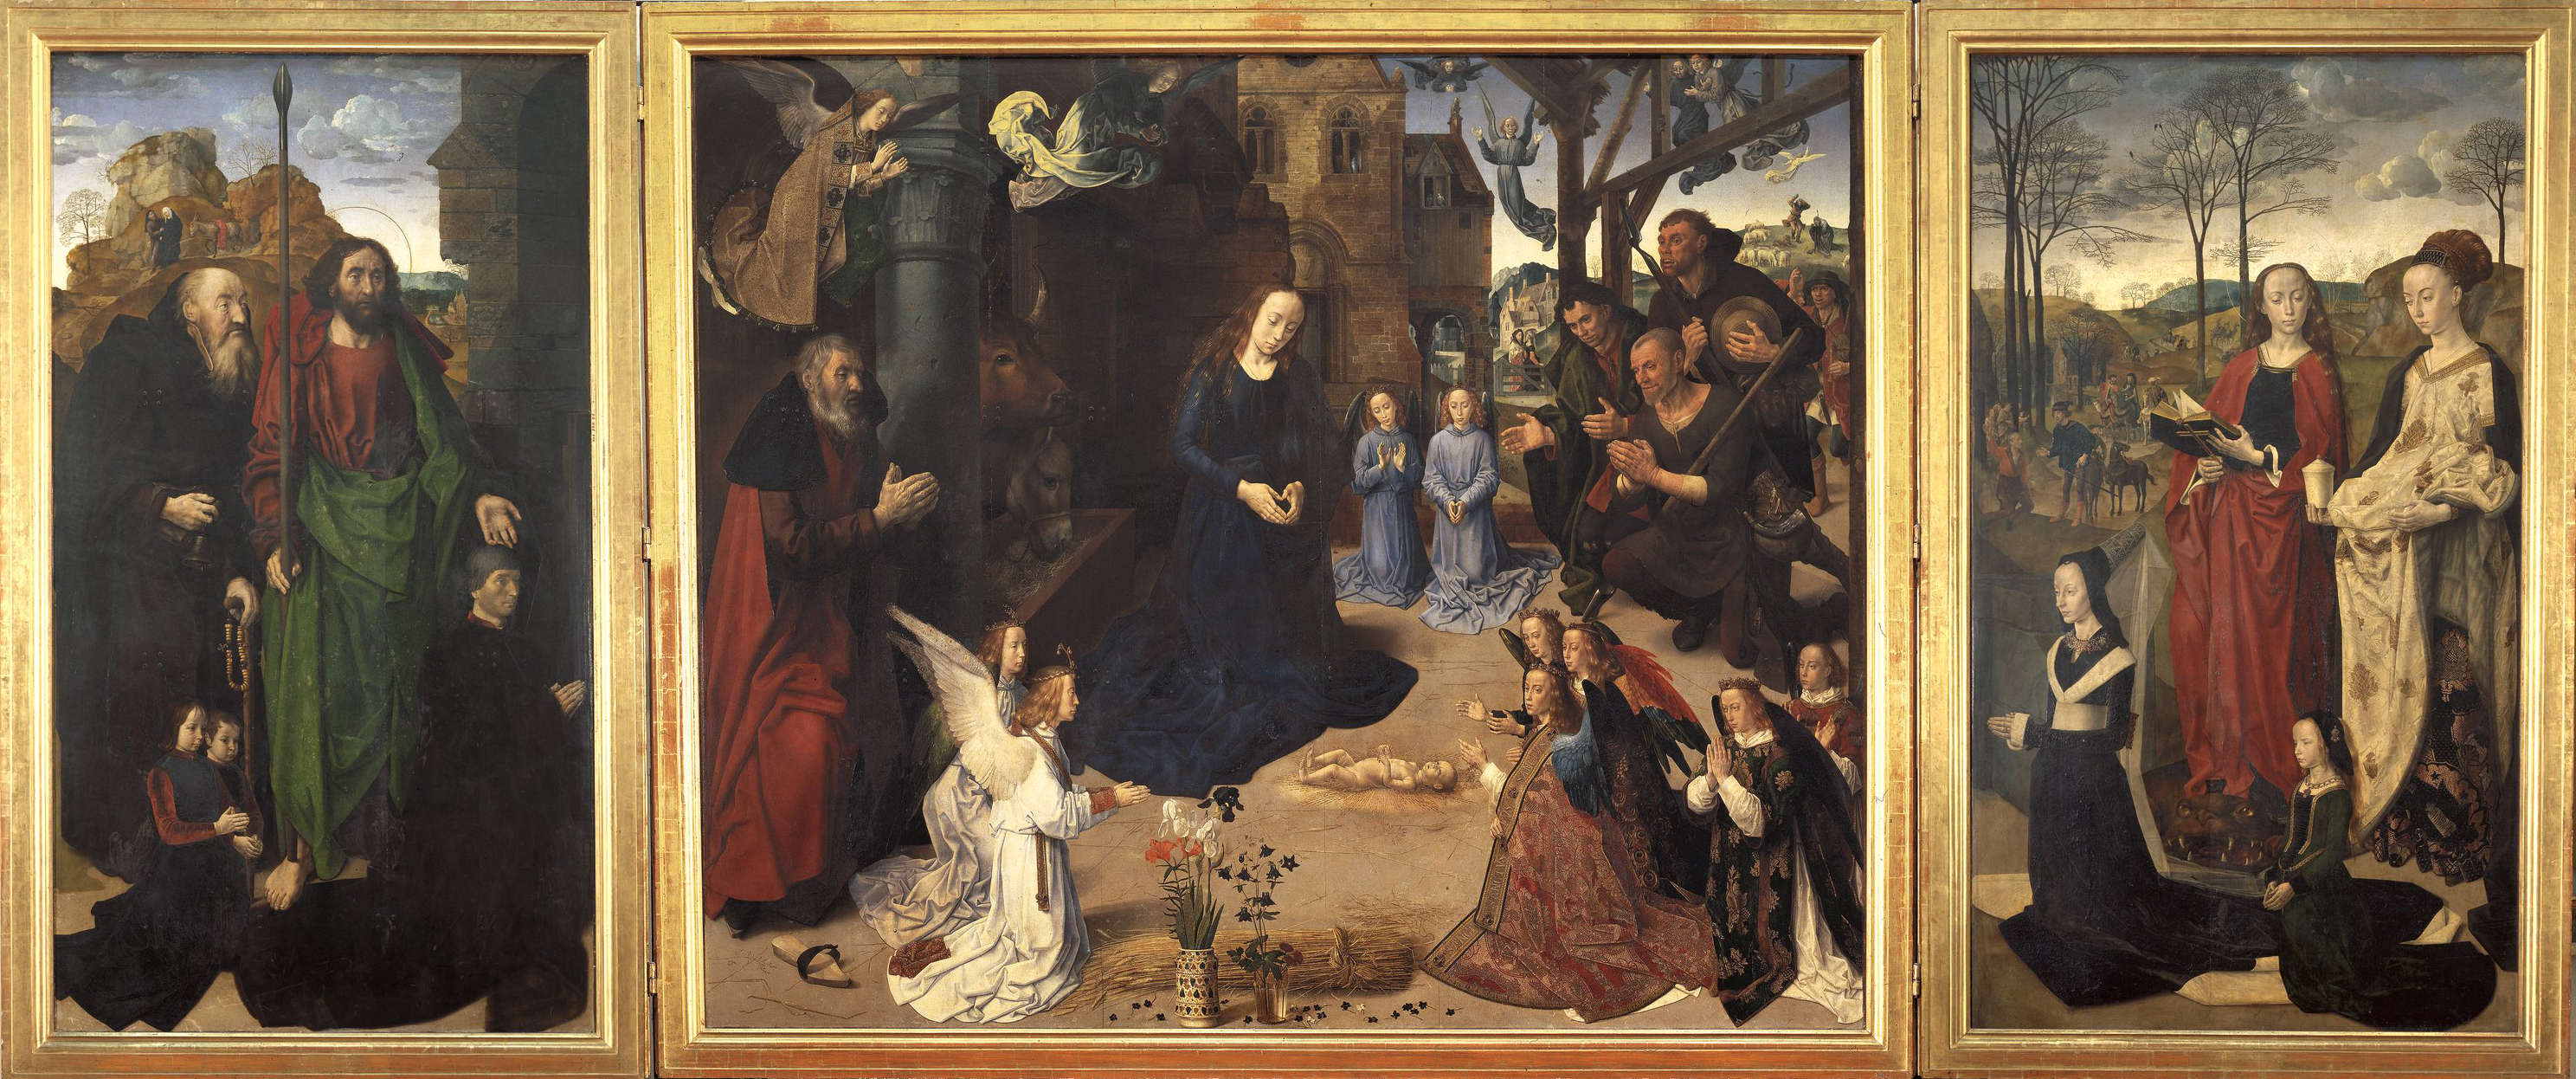 Hugo van der Goes, Portinari Triptych (1477-1478; oil on panel, 253 x 608 cm; Florence, Uffizi Galleries)